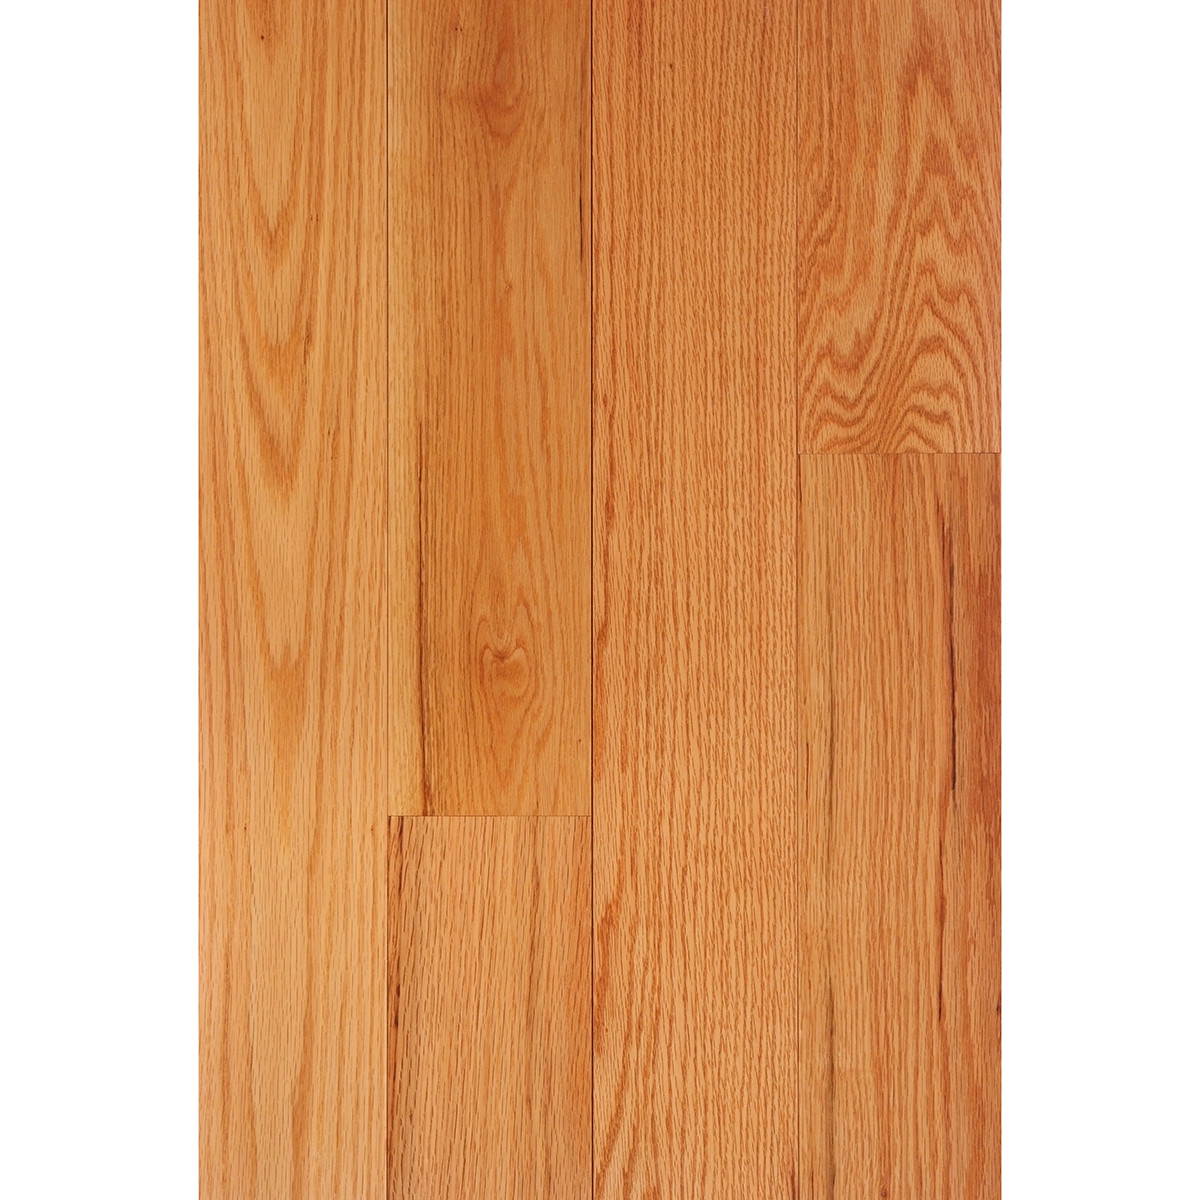 18 Best 3 1 4 White Oak Hardwood Flooring 2022 free download 3 1 4 white oak hardwood flooring of red oak 3 4 x 5 select grade flooring pertaining to prefinished clear semi gloss 3 4